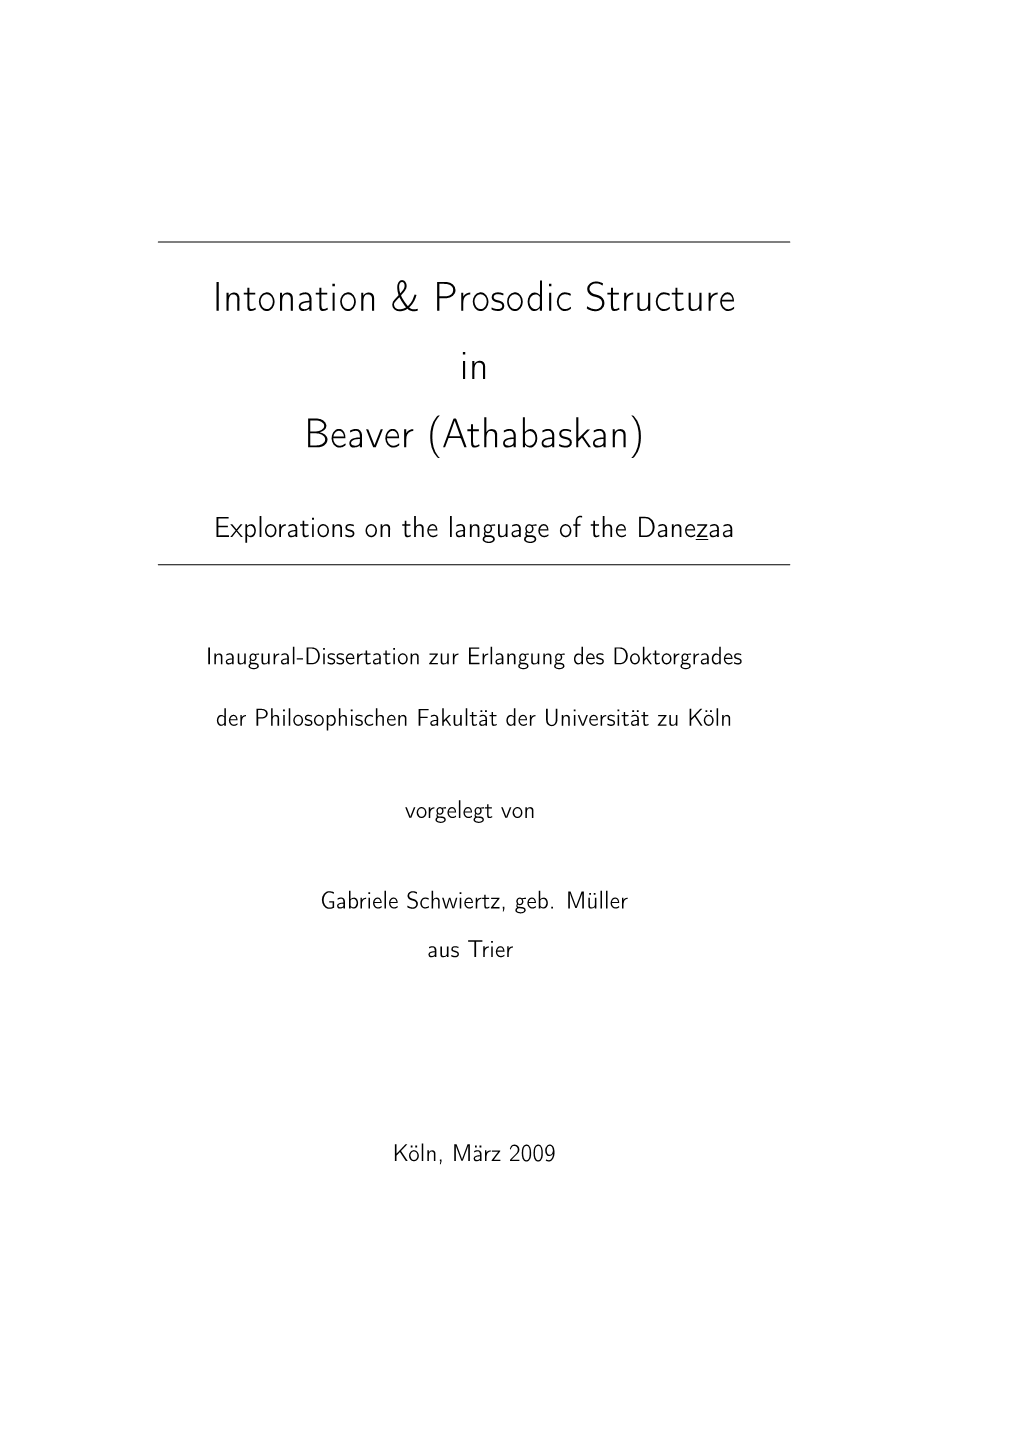 Intonation & Prosodic Structure in Beaver (Athabaskan)